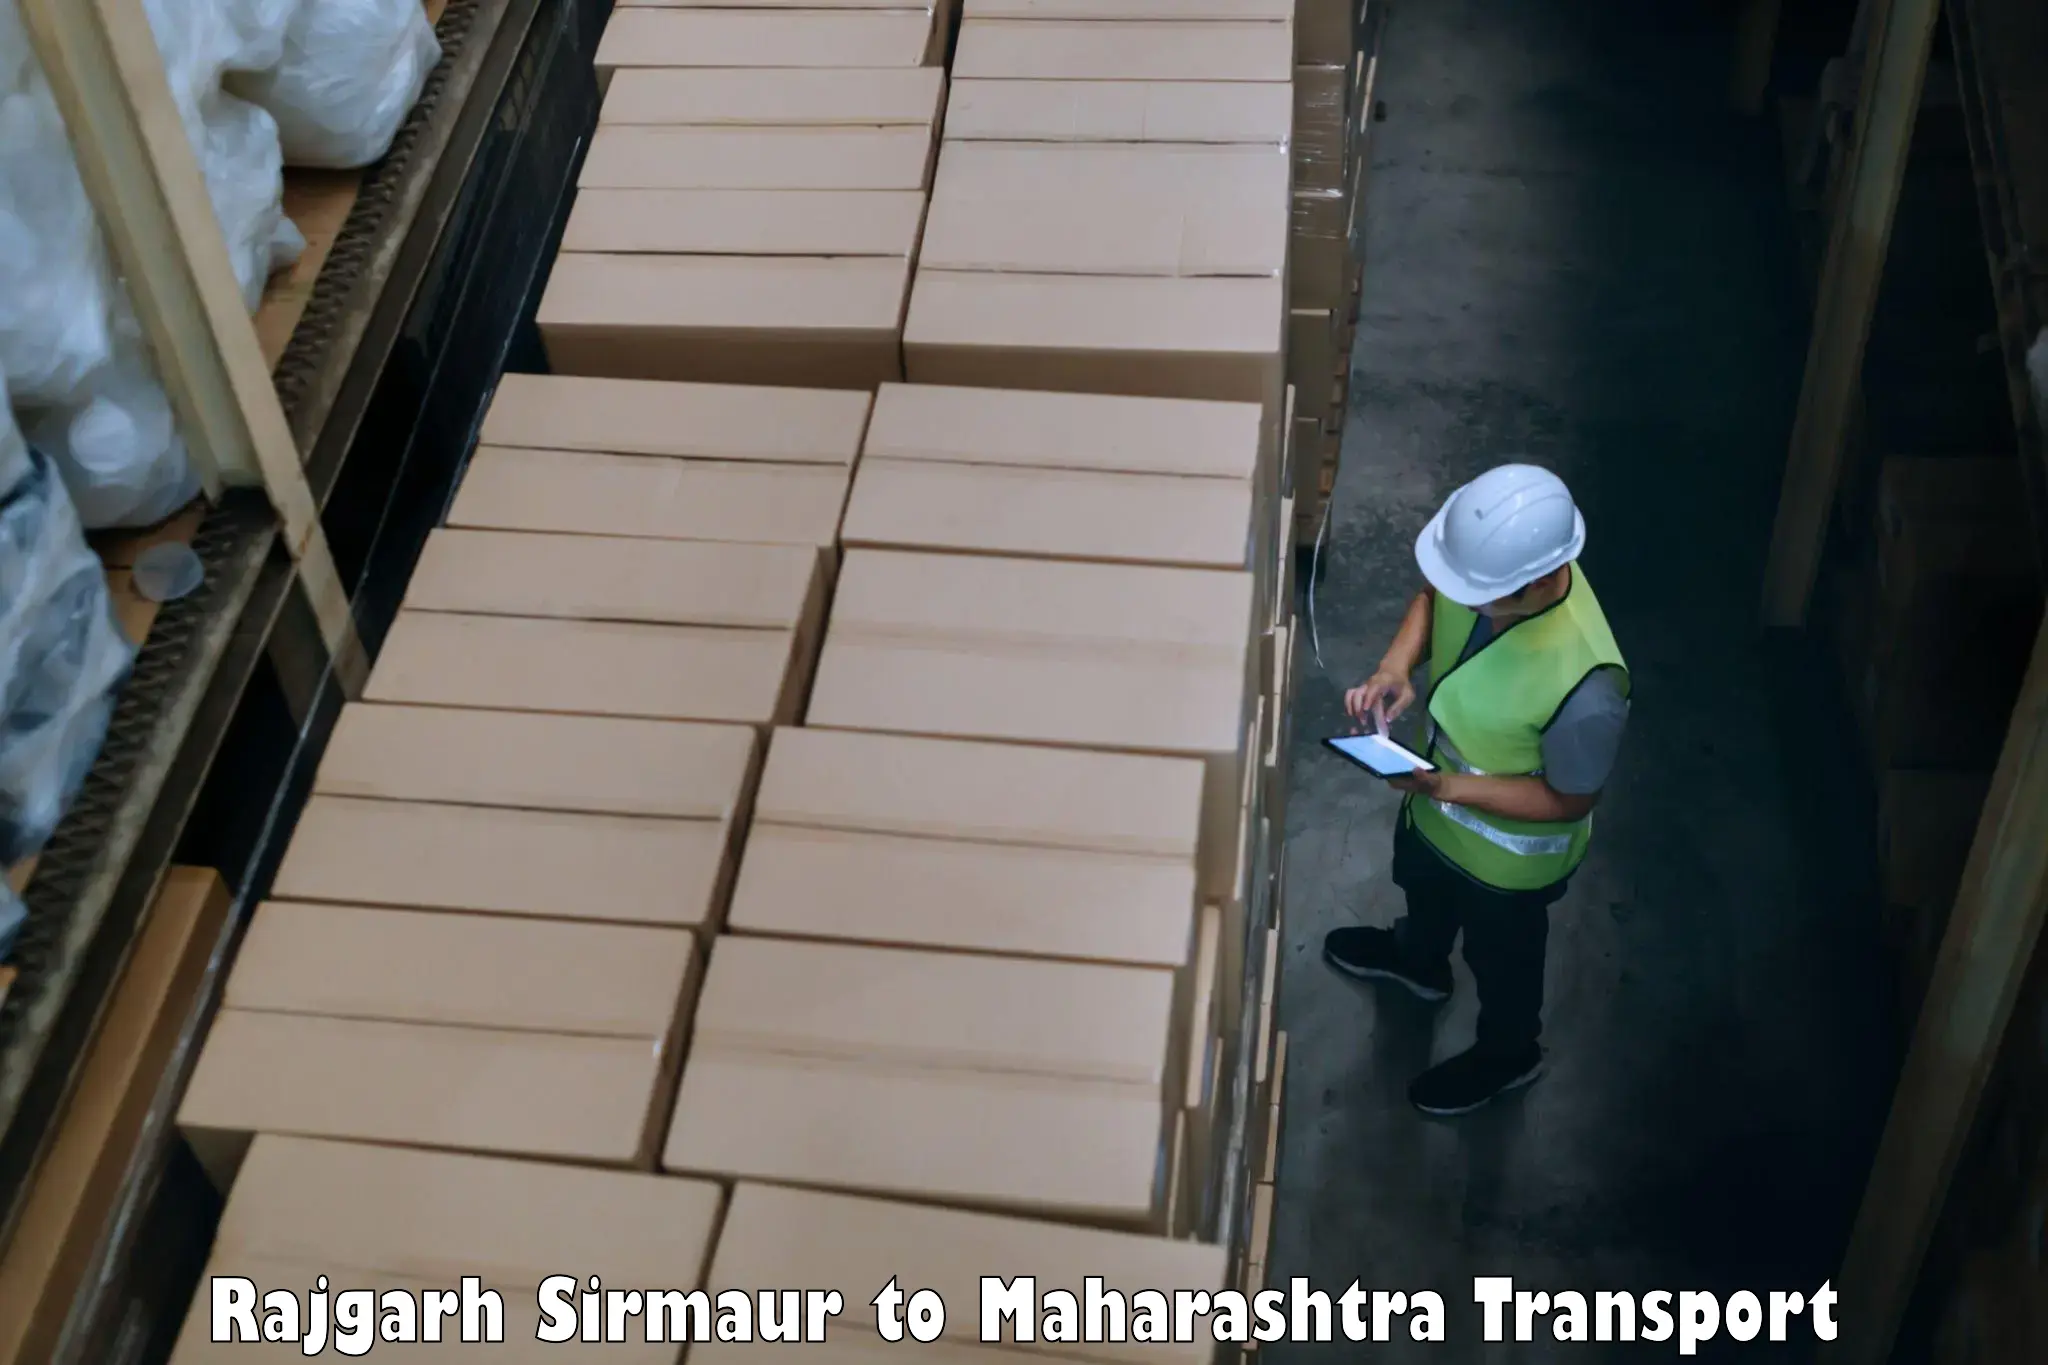 Nearby transport service Rajgarh Sirmaur to Maharashtra